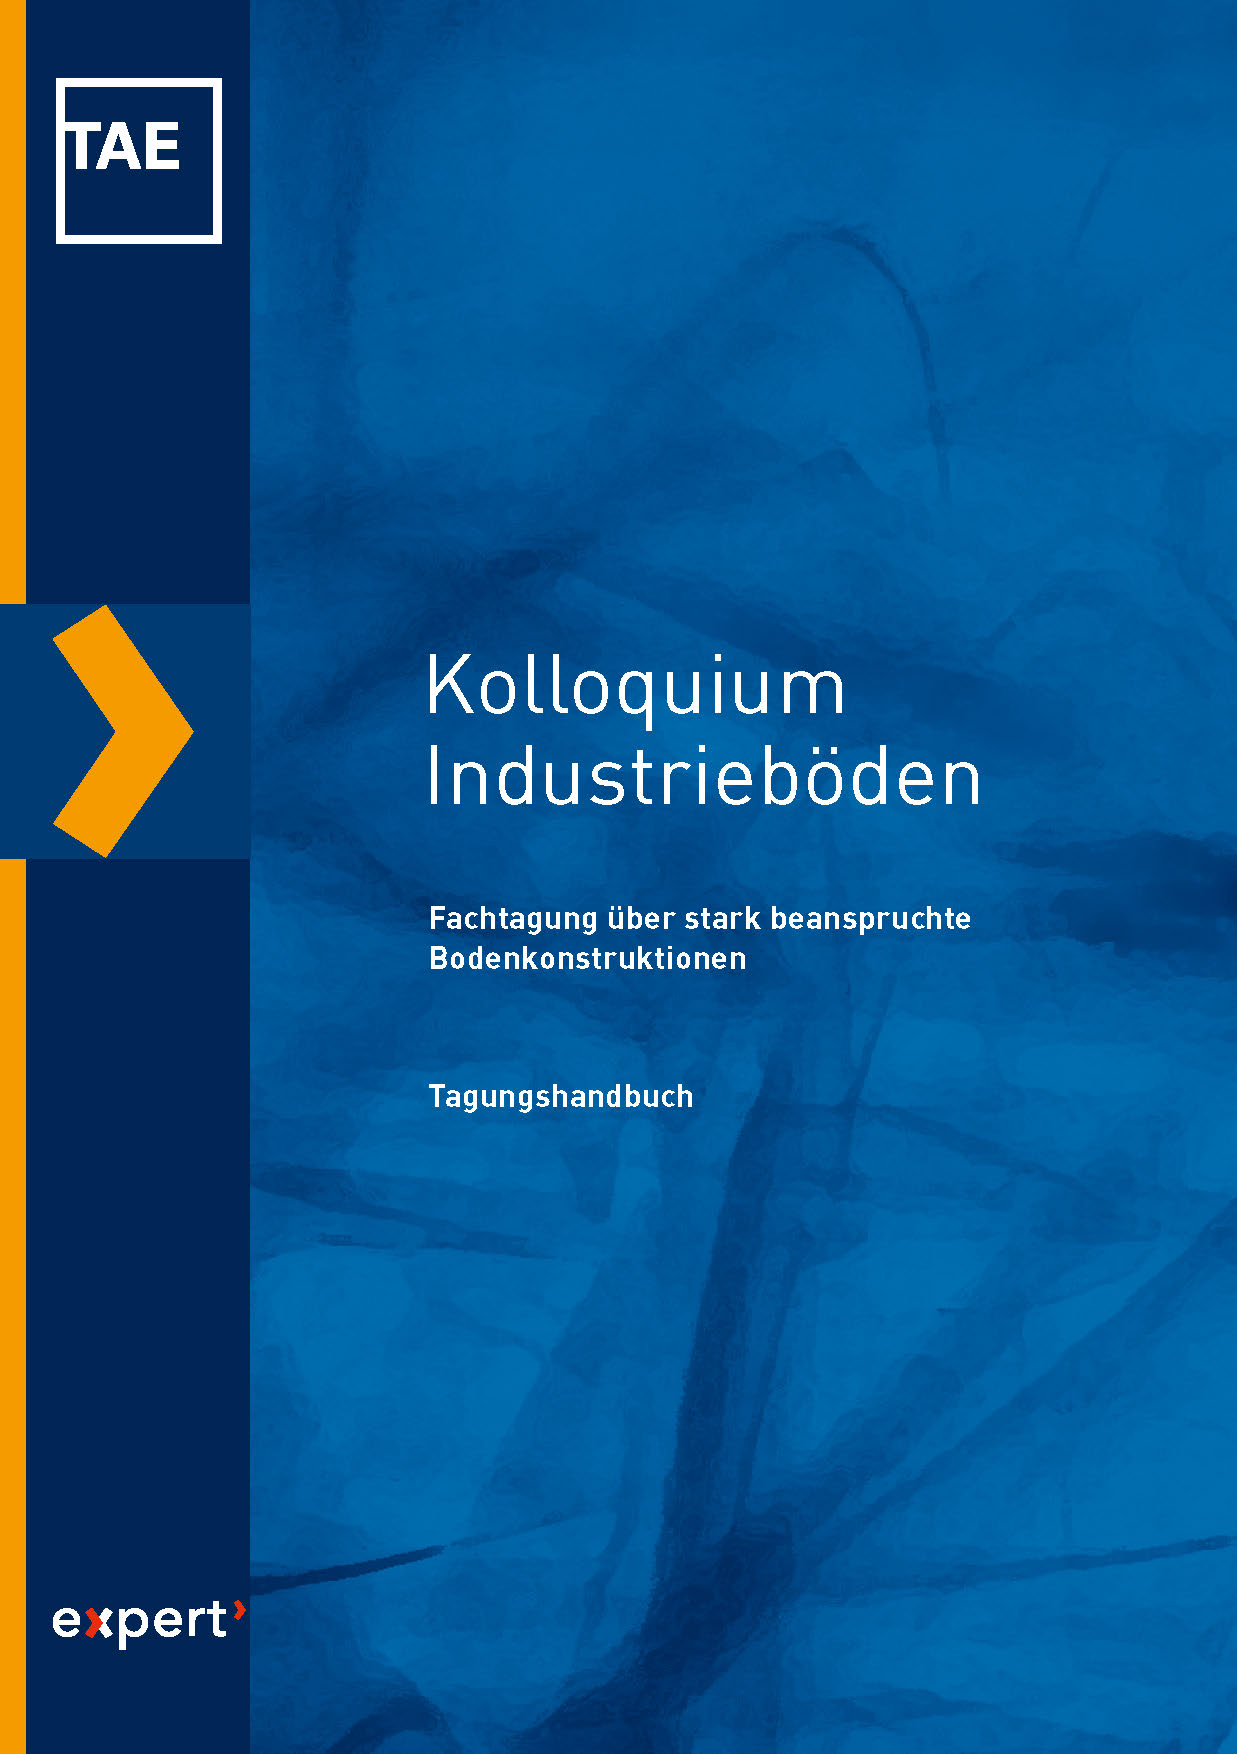 KIB - Kolloquium Industrieböden